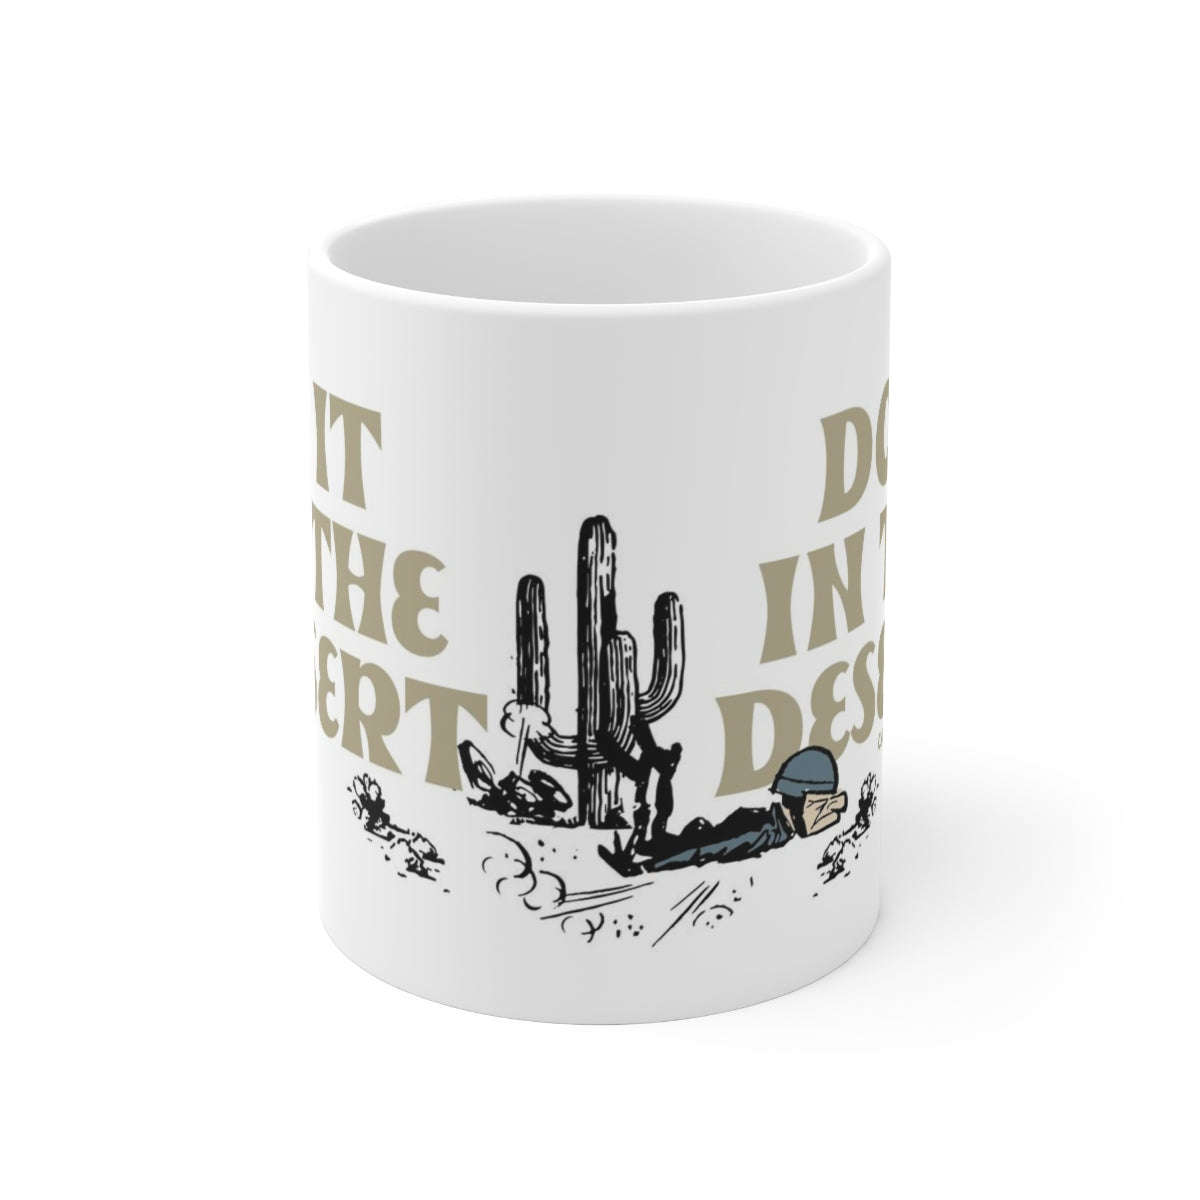 Standard Size "Do it in the Desert" Cactus Jumpers Ceramic Mug 11oz